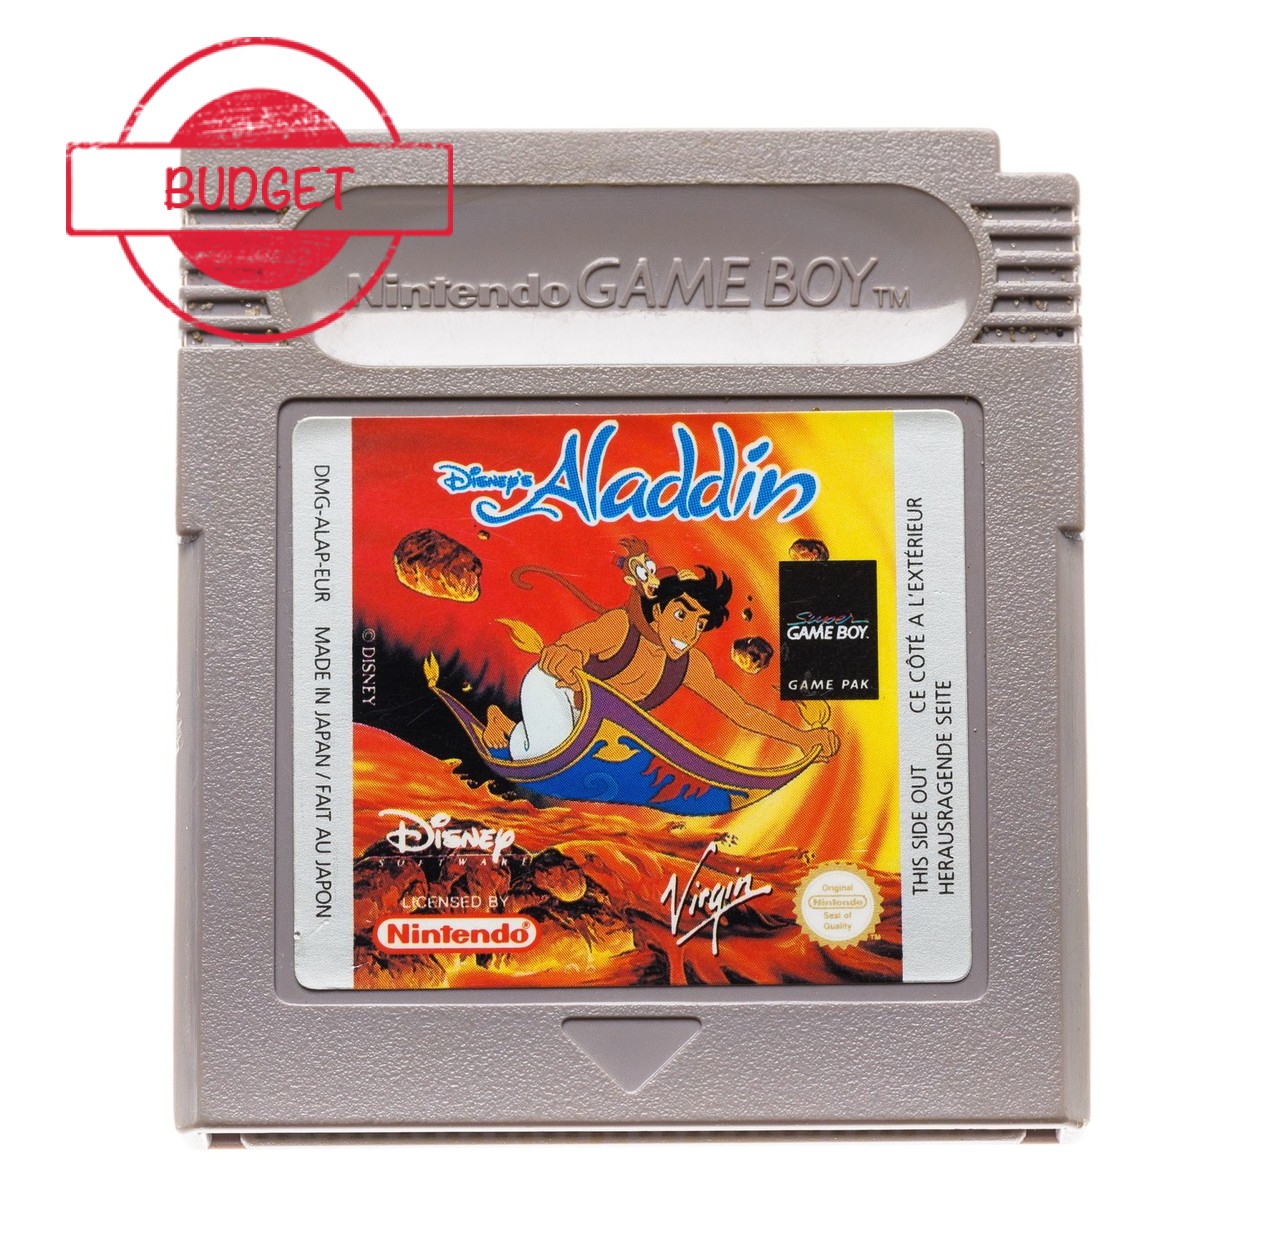 Aladdin - Budget Kopen | Gameboy Classic Games